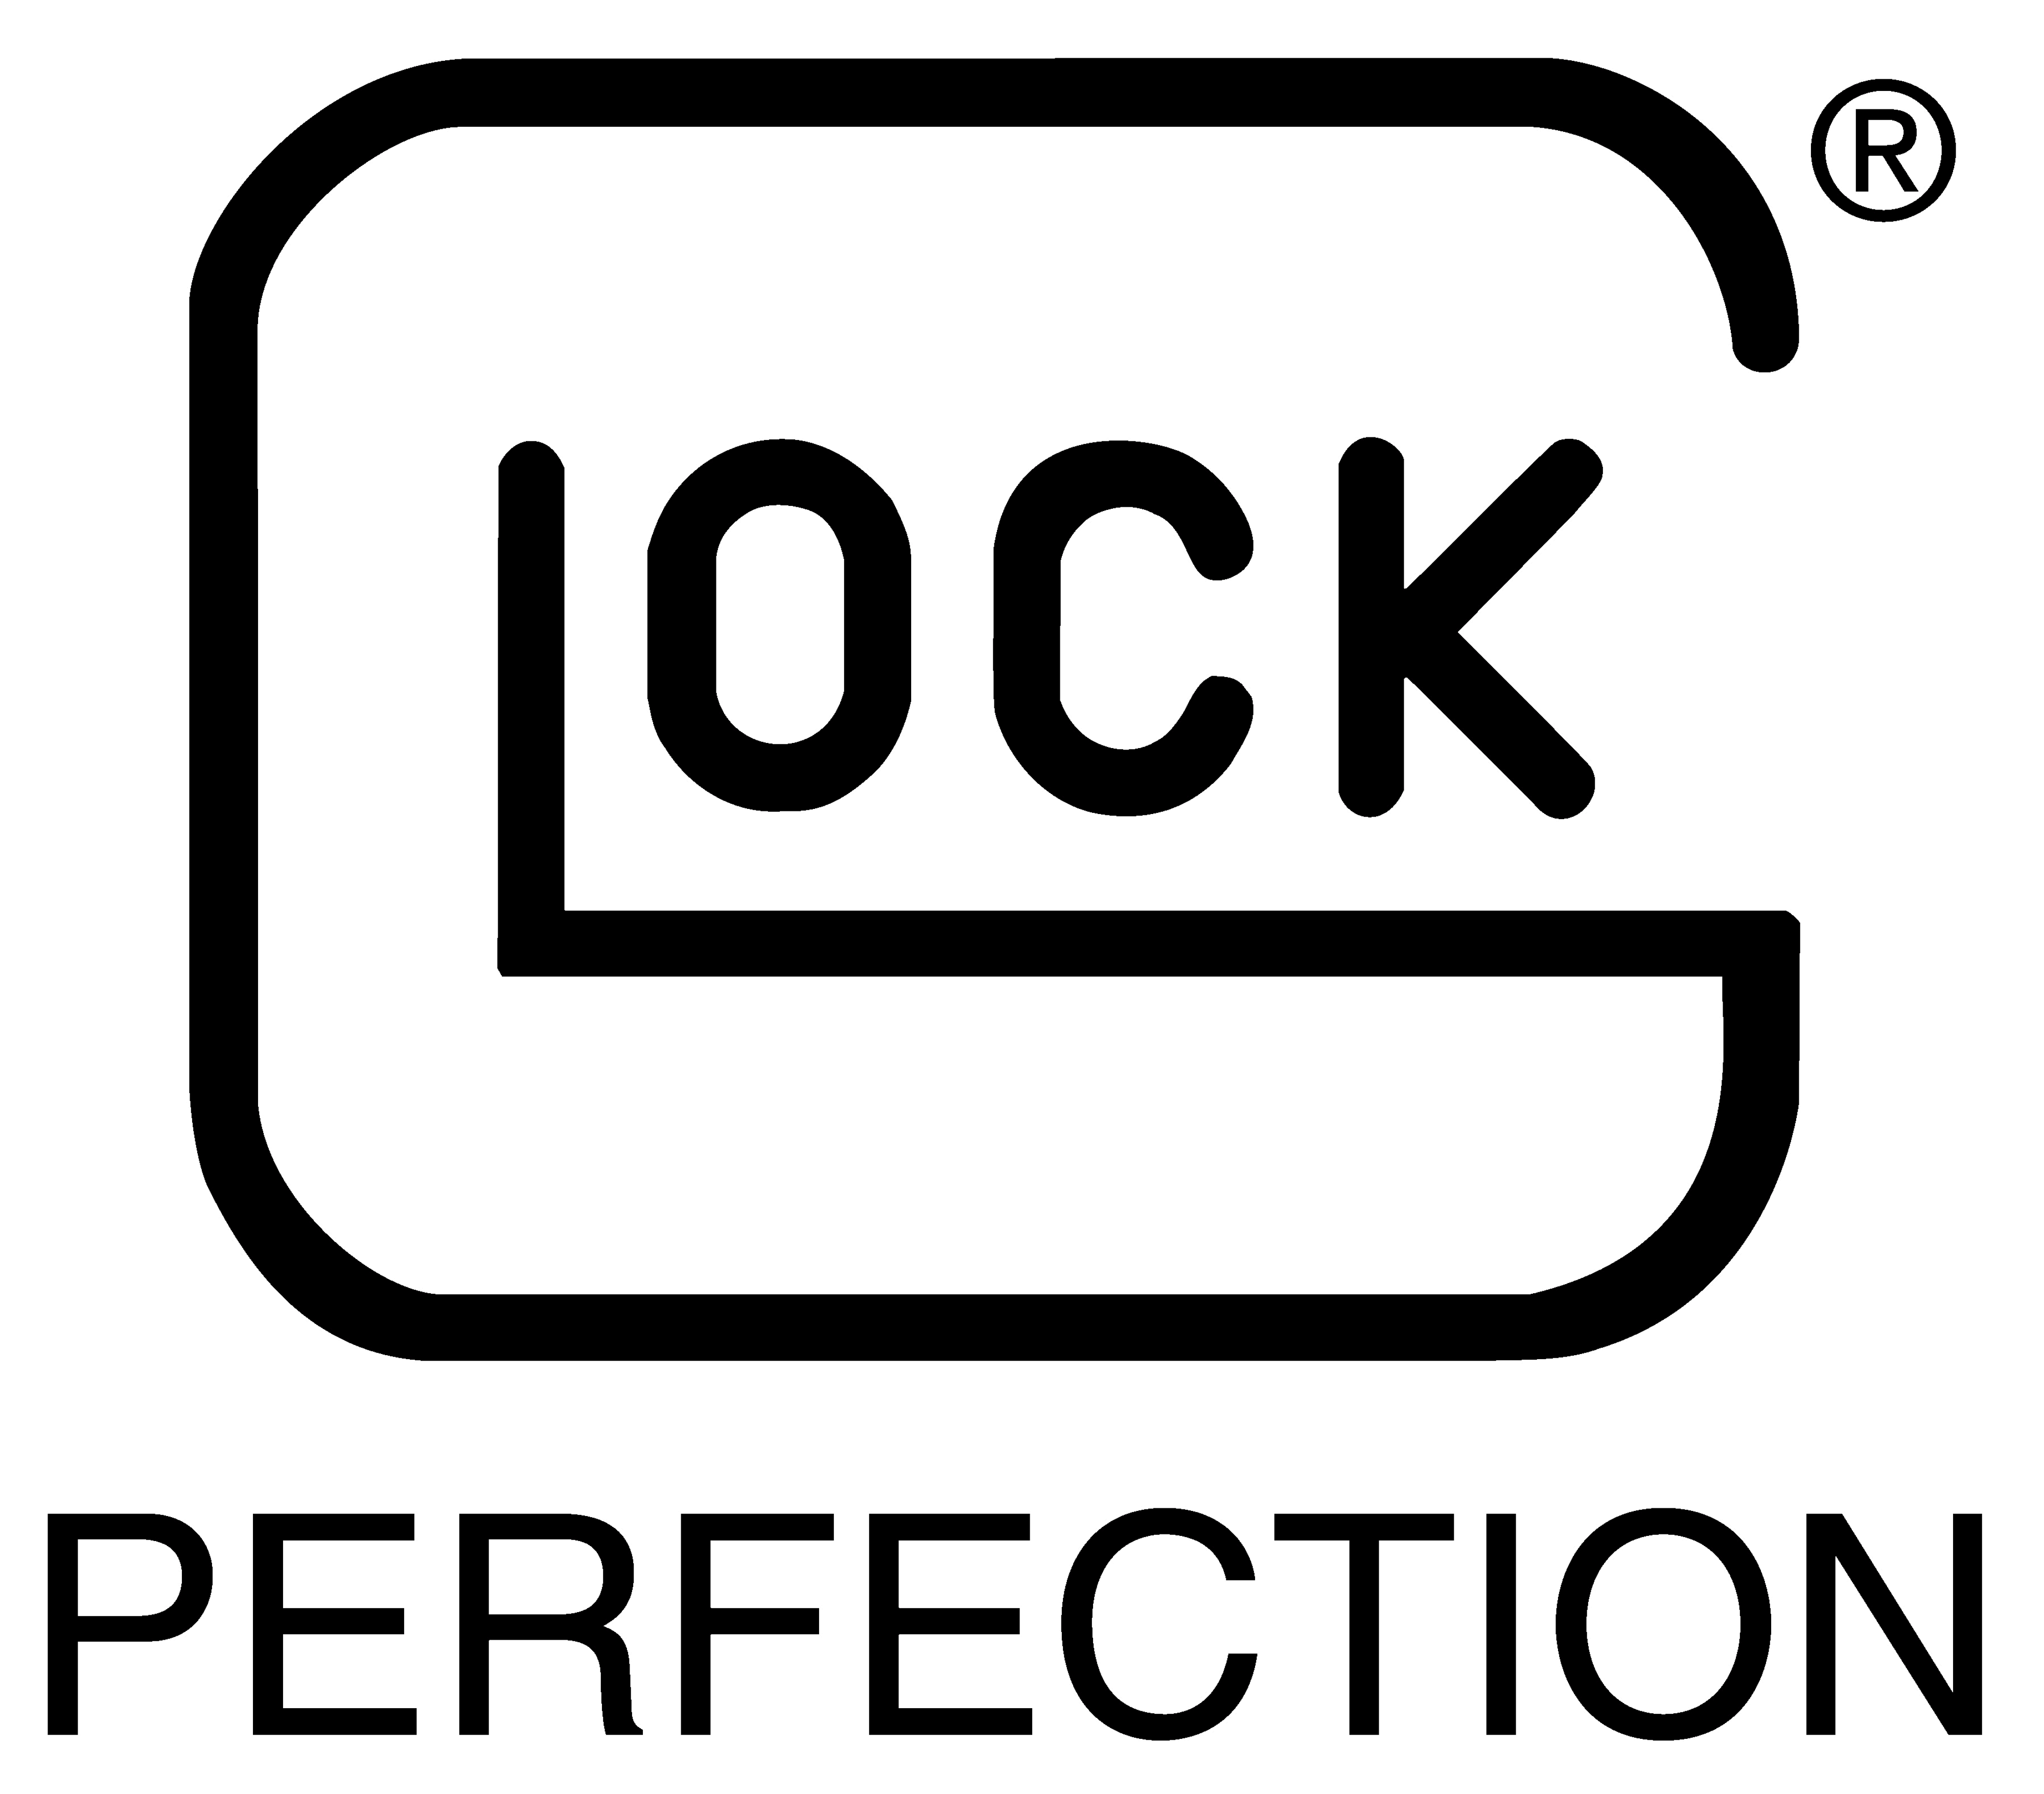 https://pacifictradinggroupllc.com/wp-content/uploads/2019/05/glock-logo-huge.png